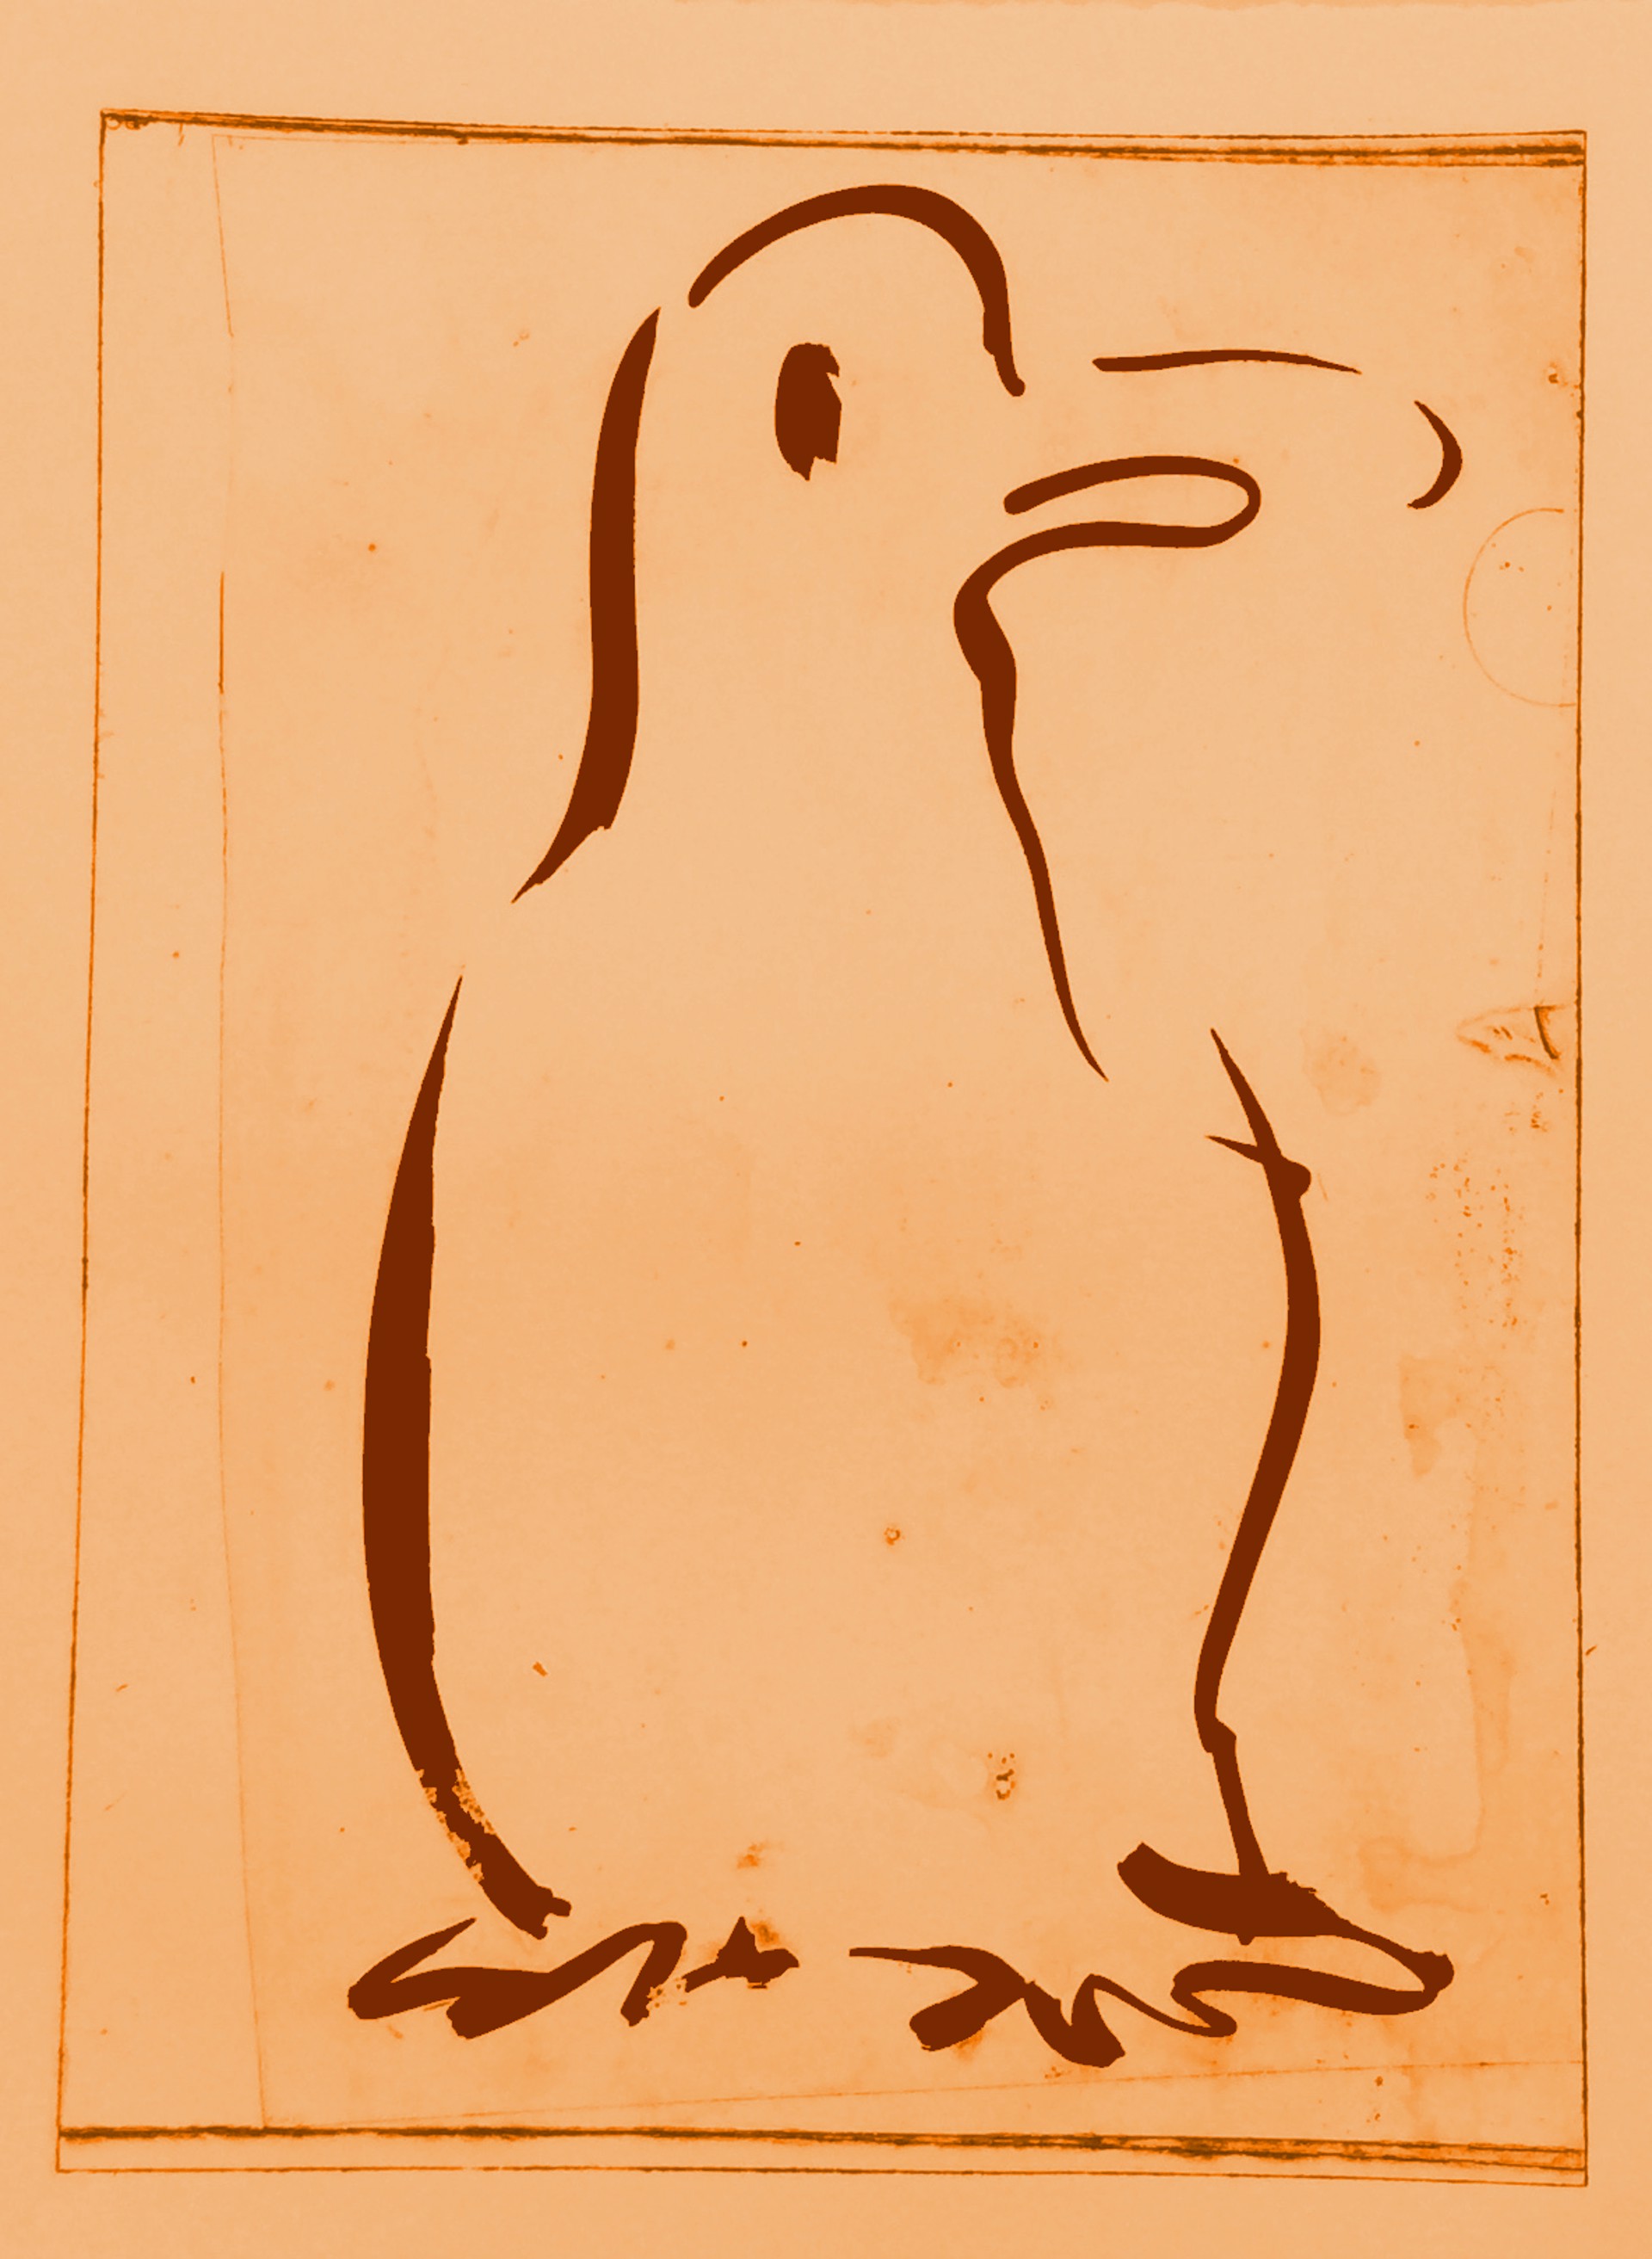 Penguin by Jesse Wood